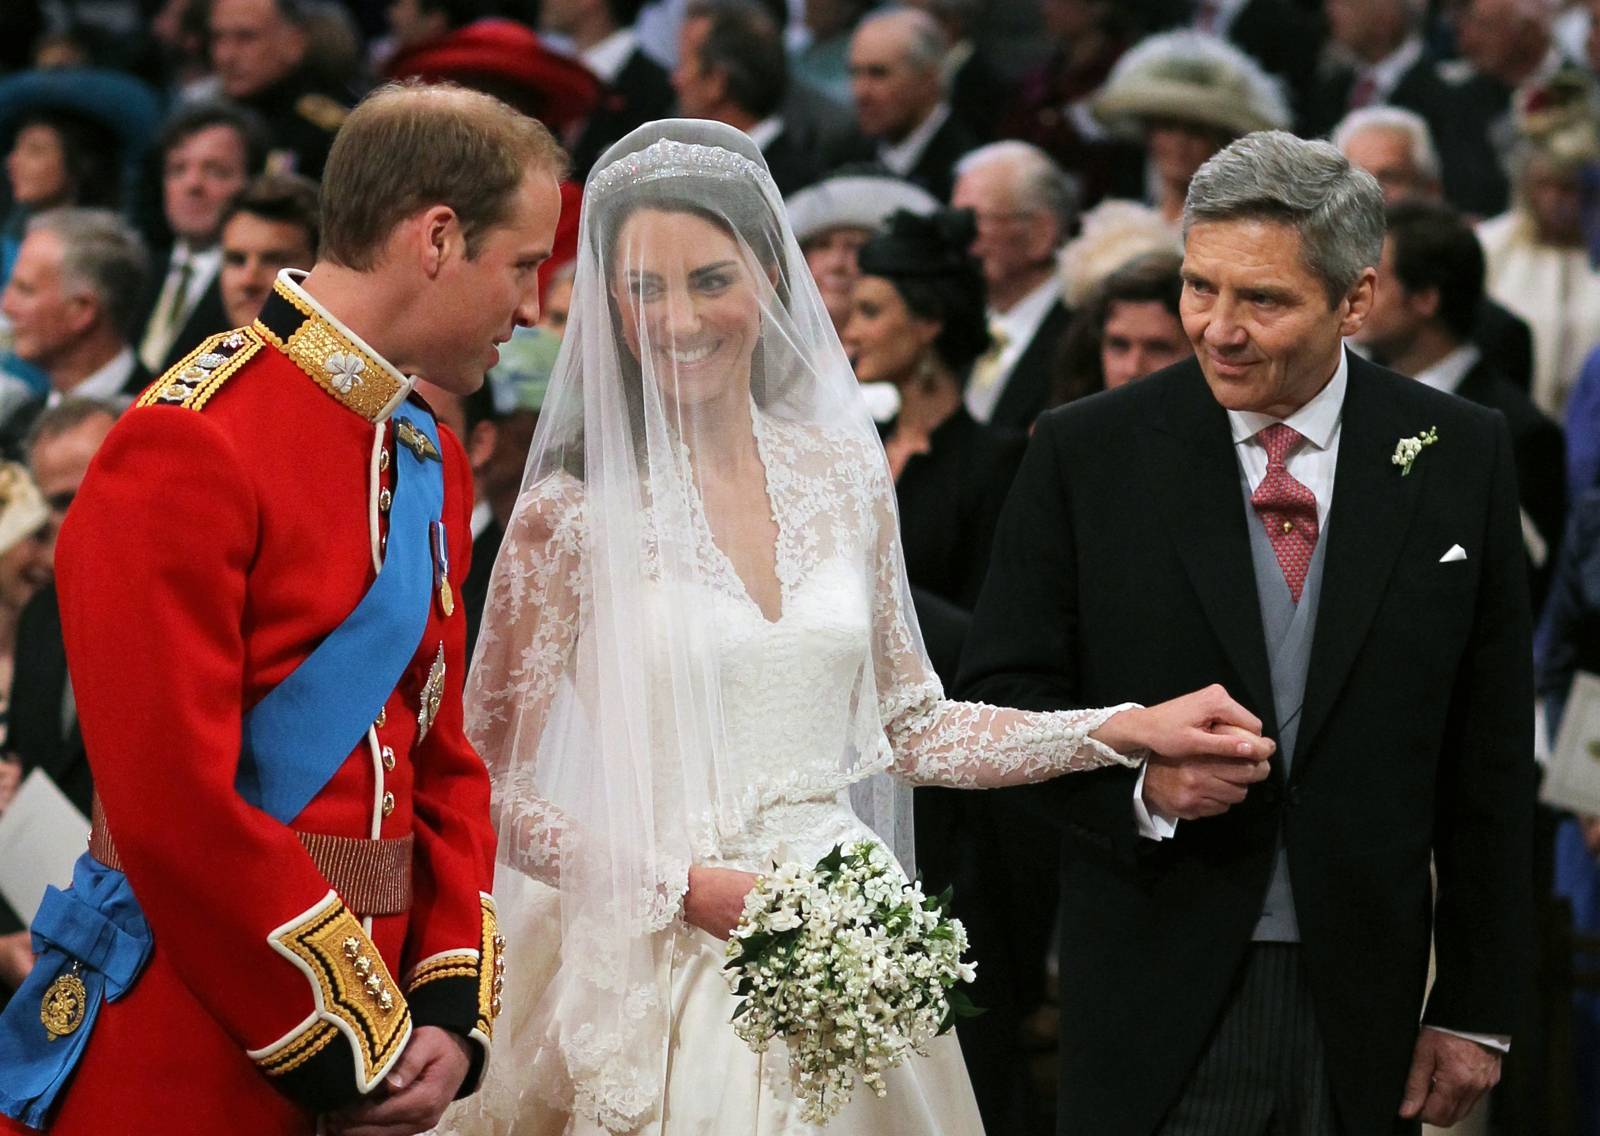 The Duke and Duchess of Cambridge ninth wedding anniversary